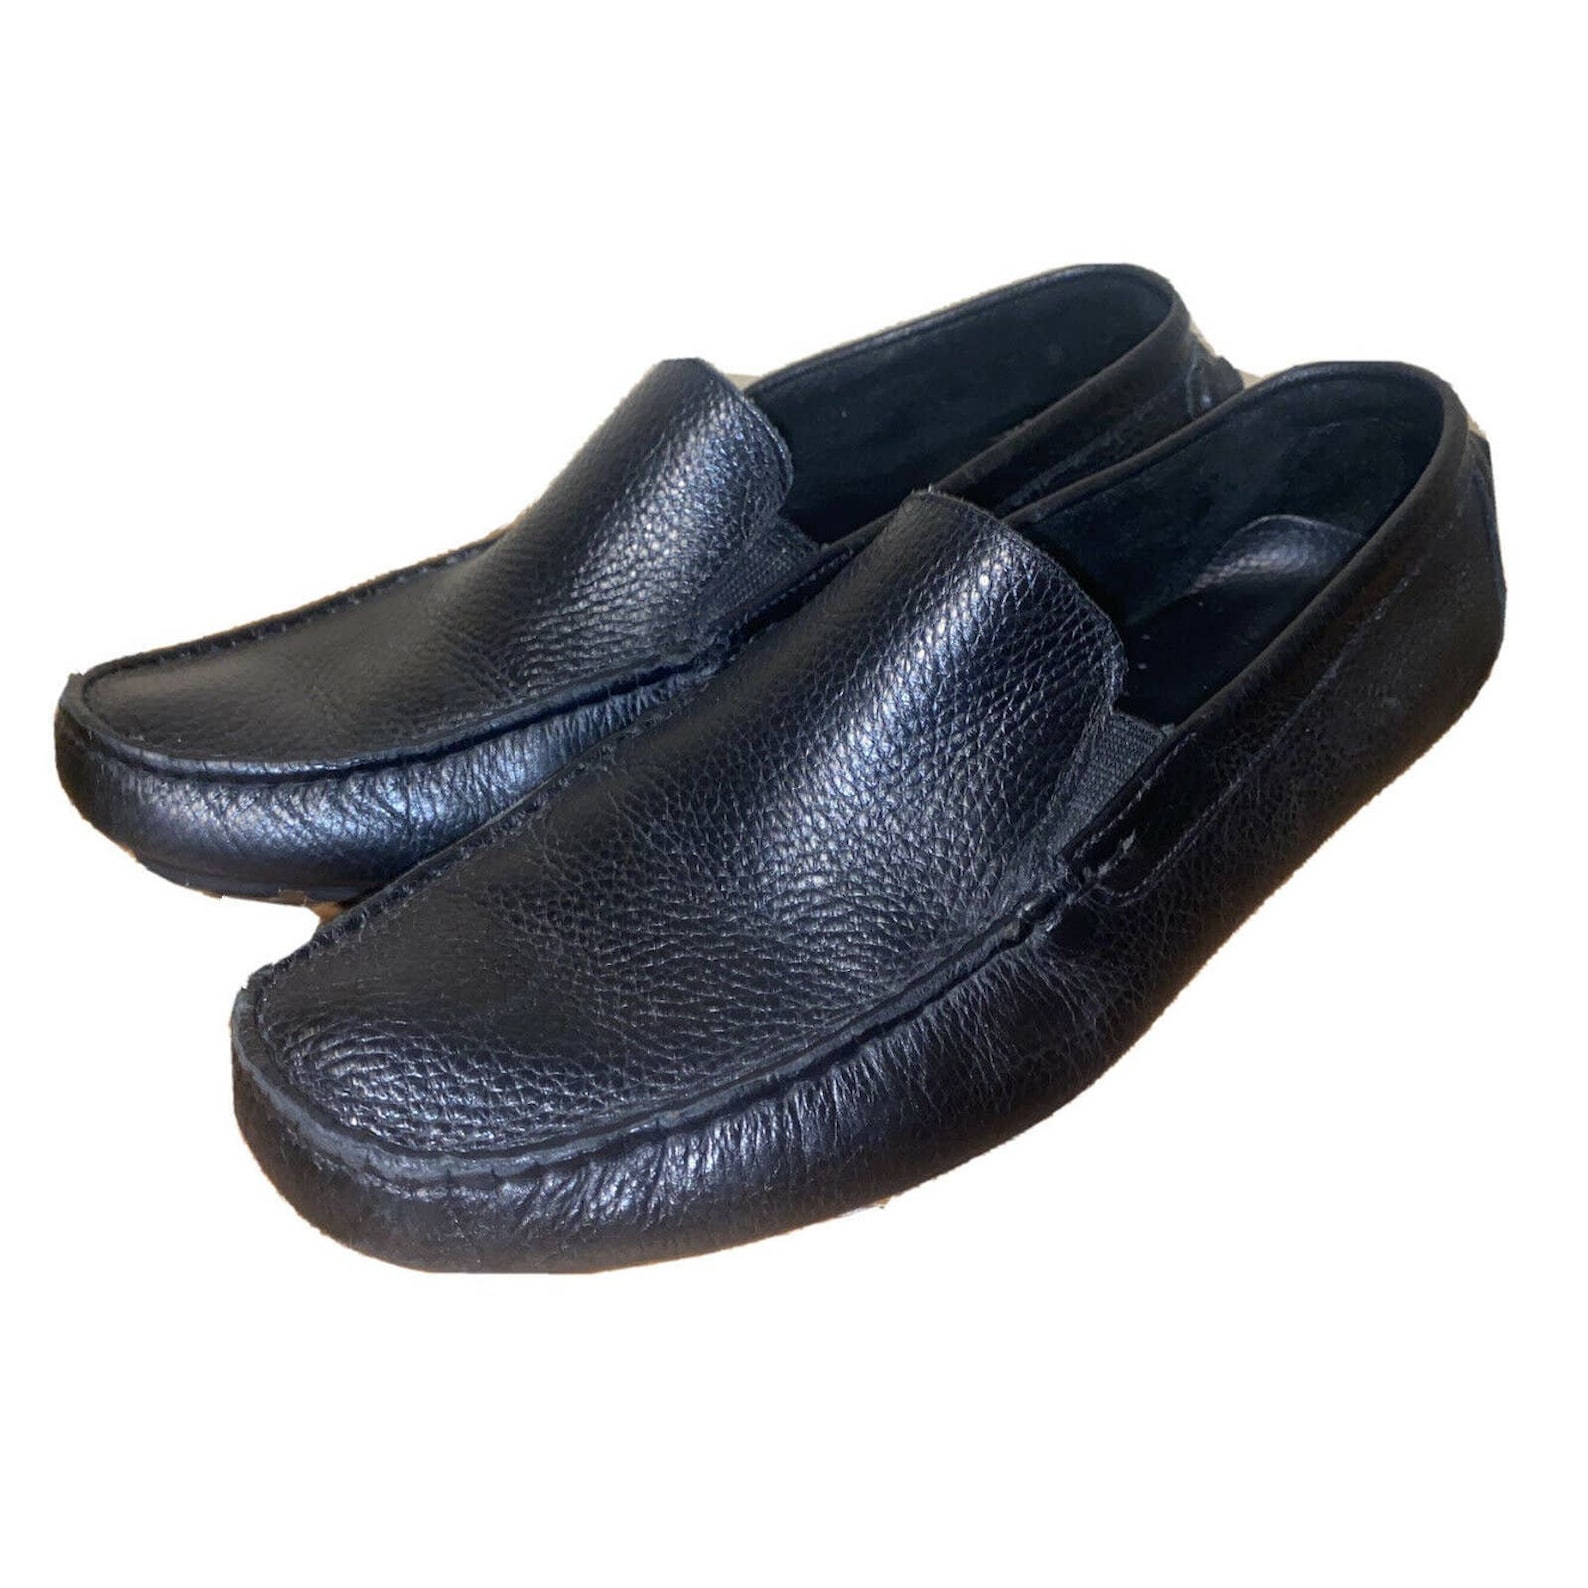 Vintage Saks Fifth Avenue Slip On Driving Loafers Black | Etsy